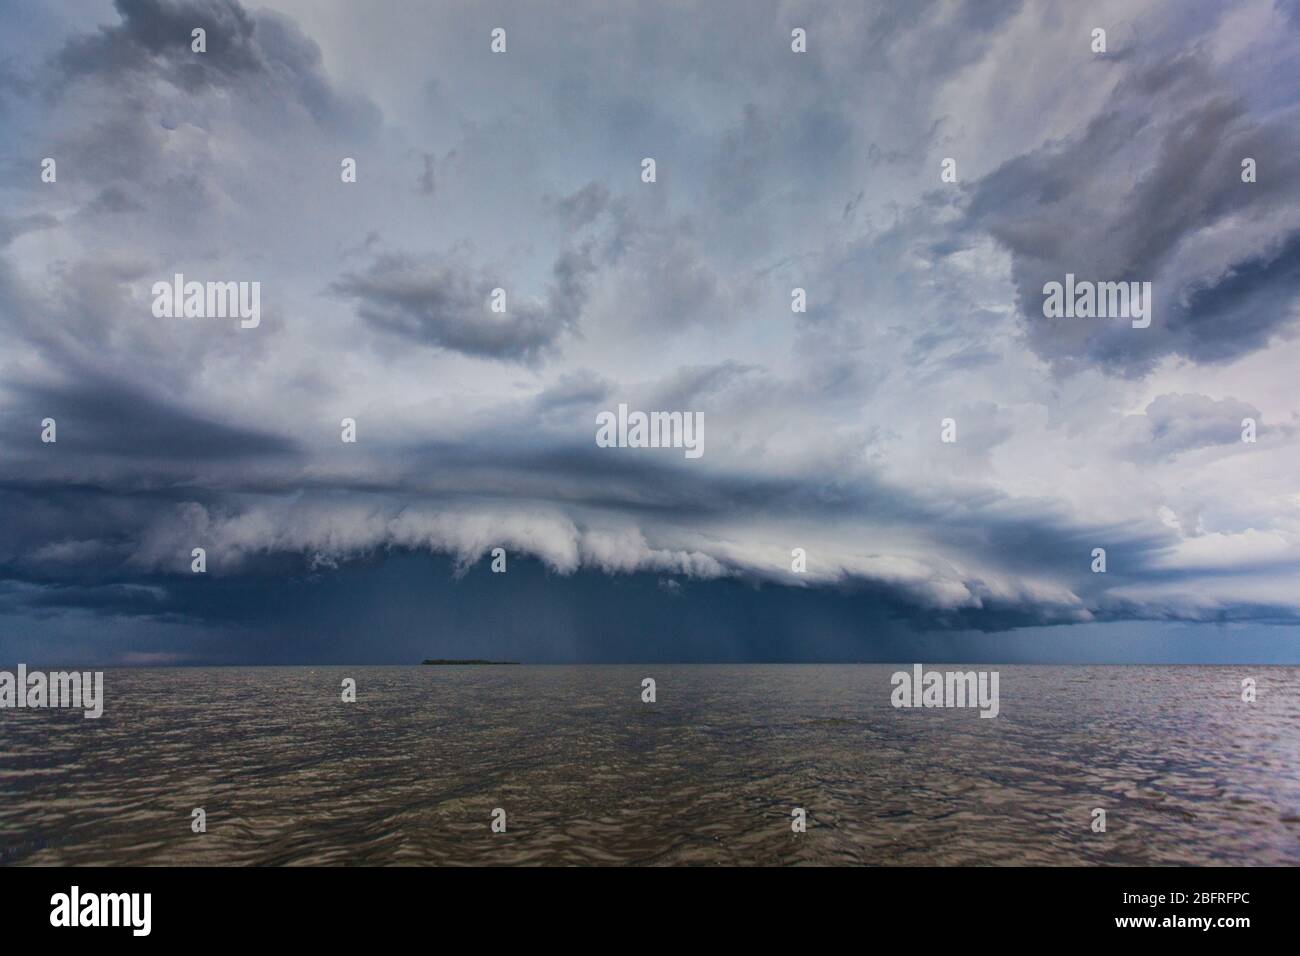 Big Storm Over Water Stock Photo